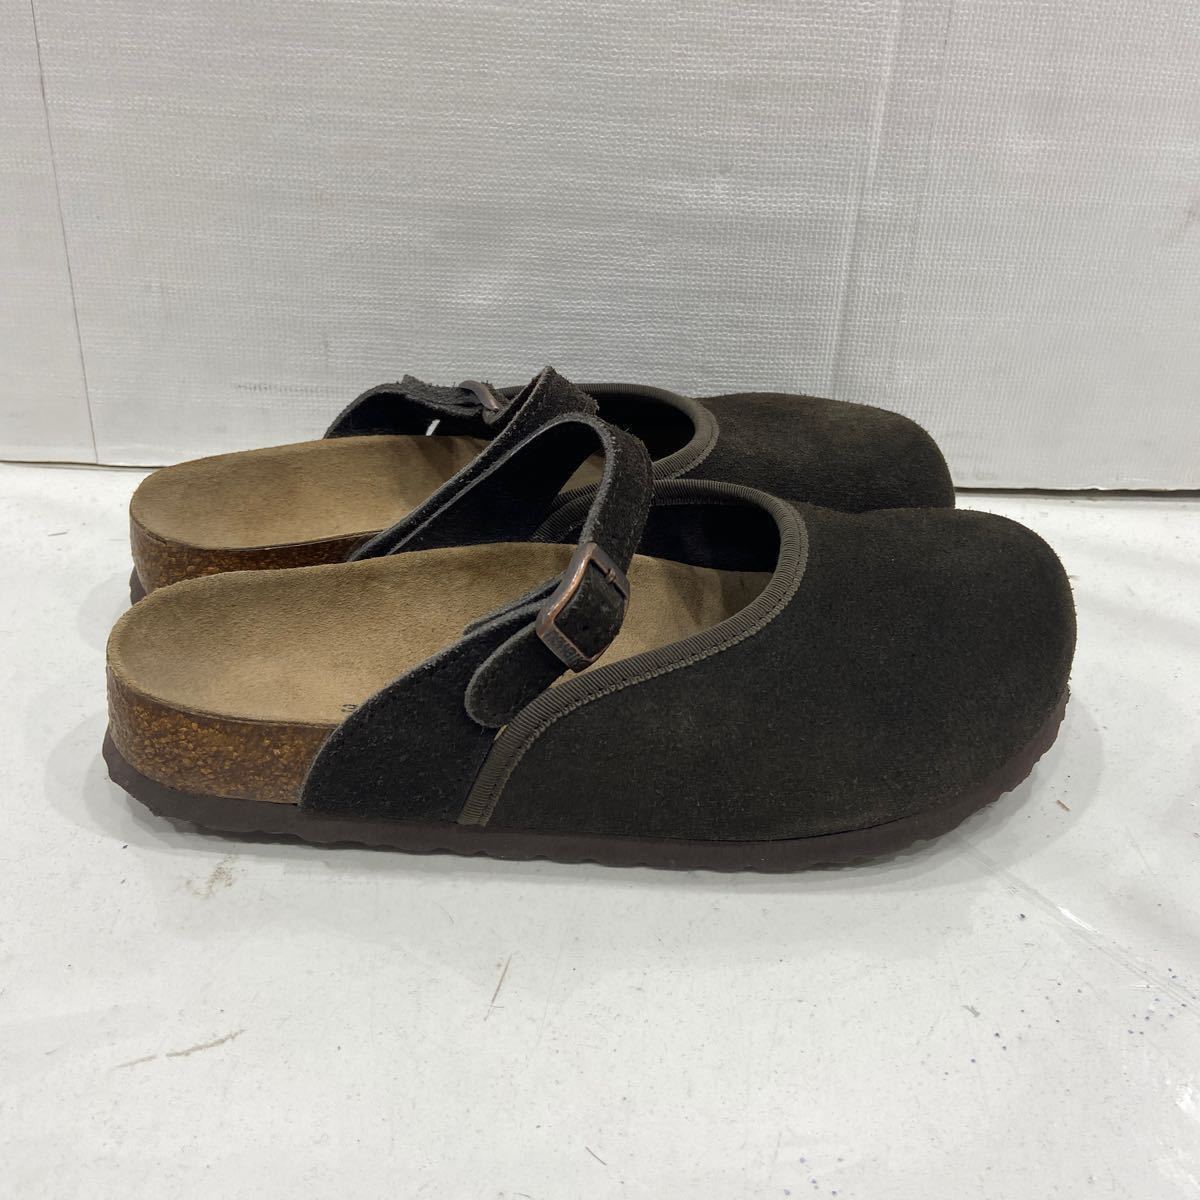 [BIRKENSTOCK Birkenstock ]newalk sandals 39 dark brown suede leather Boston new walk montana2401oki